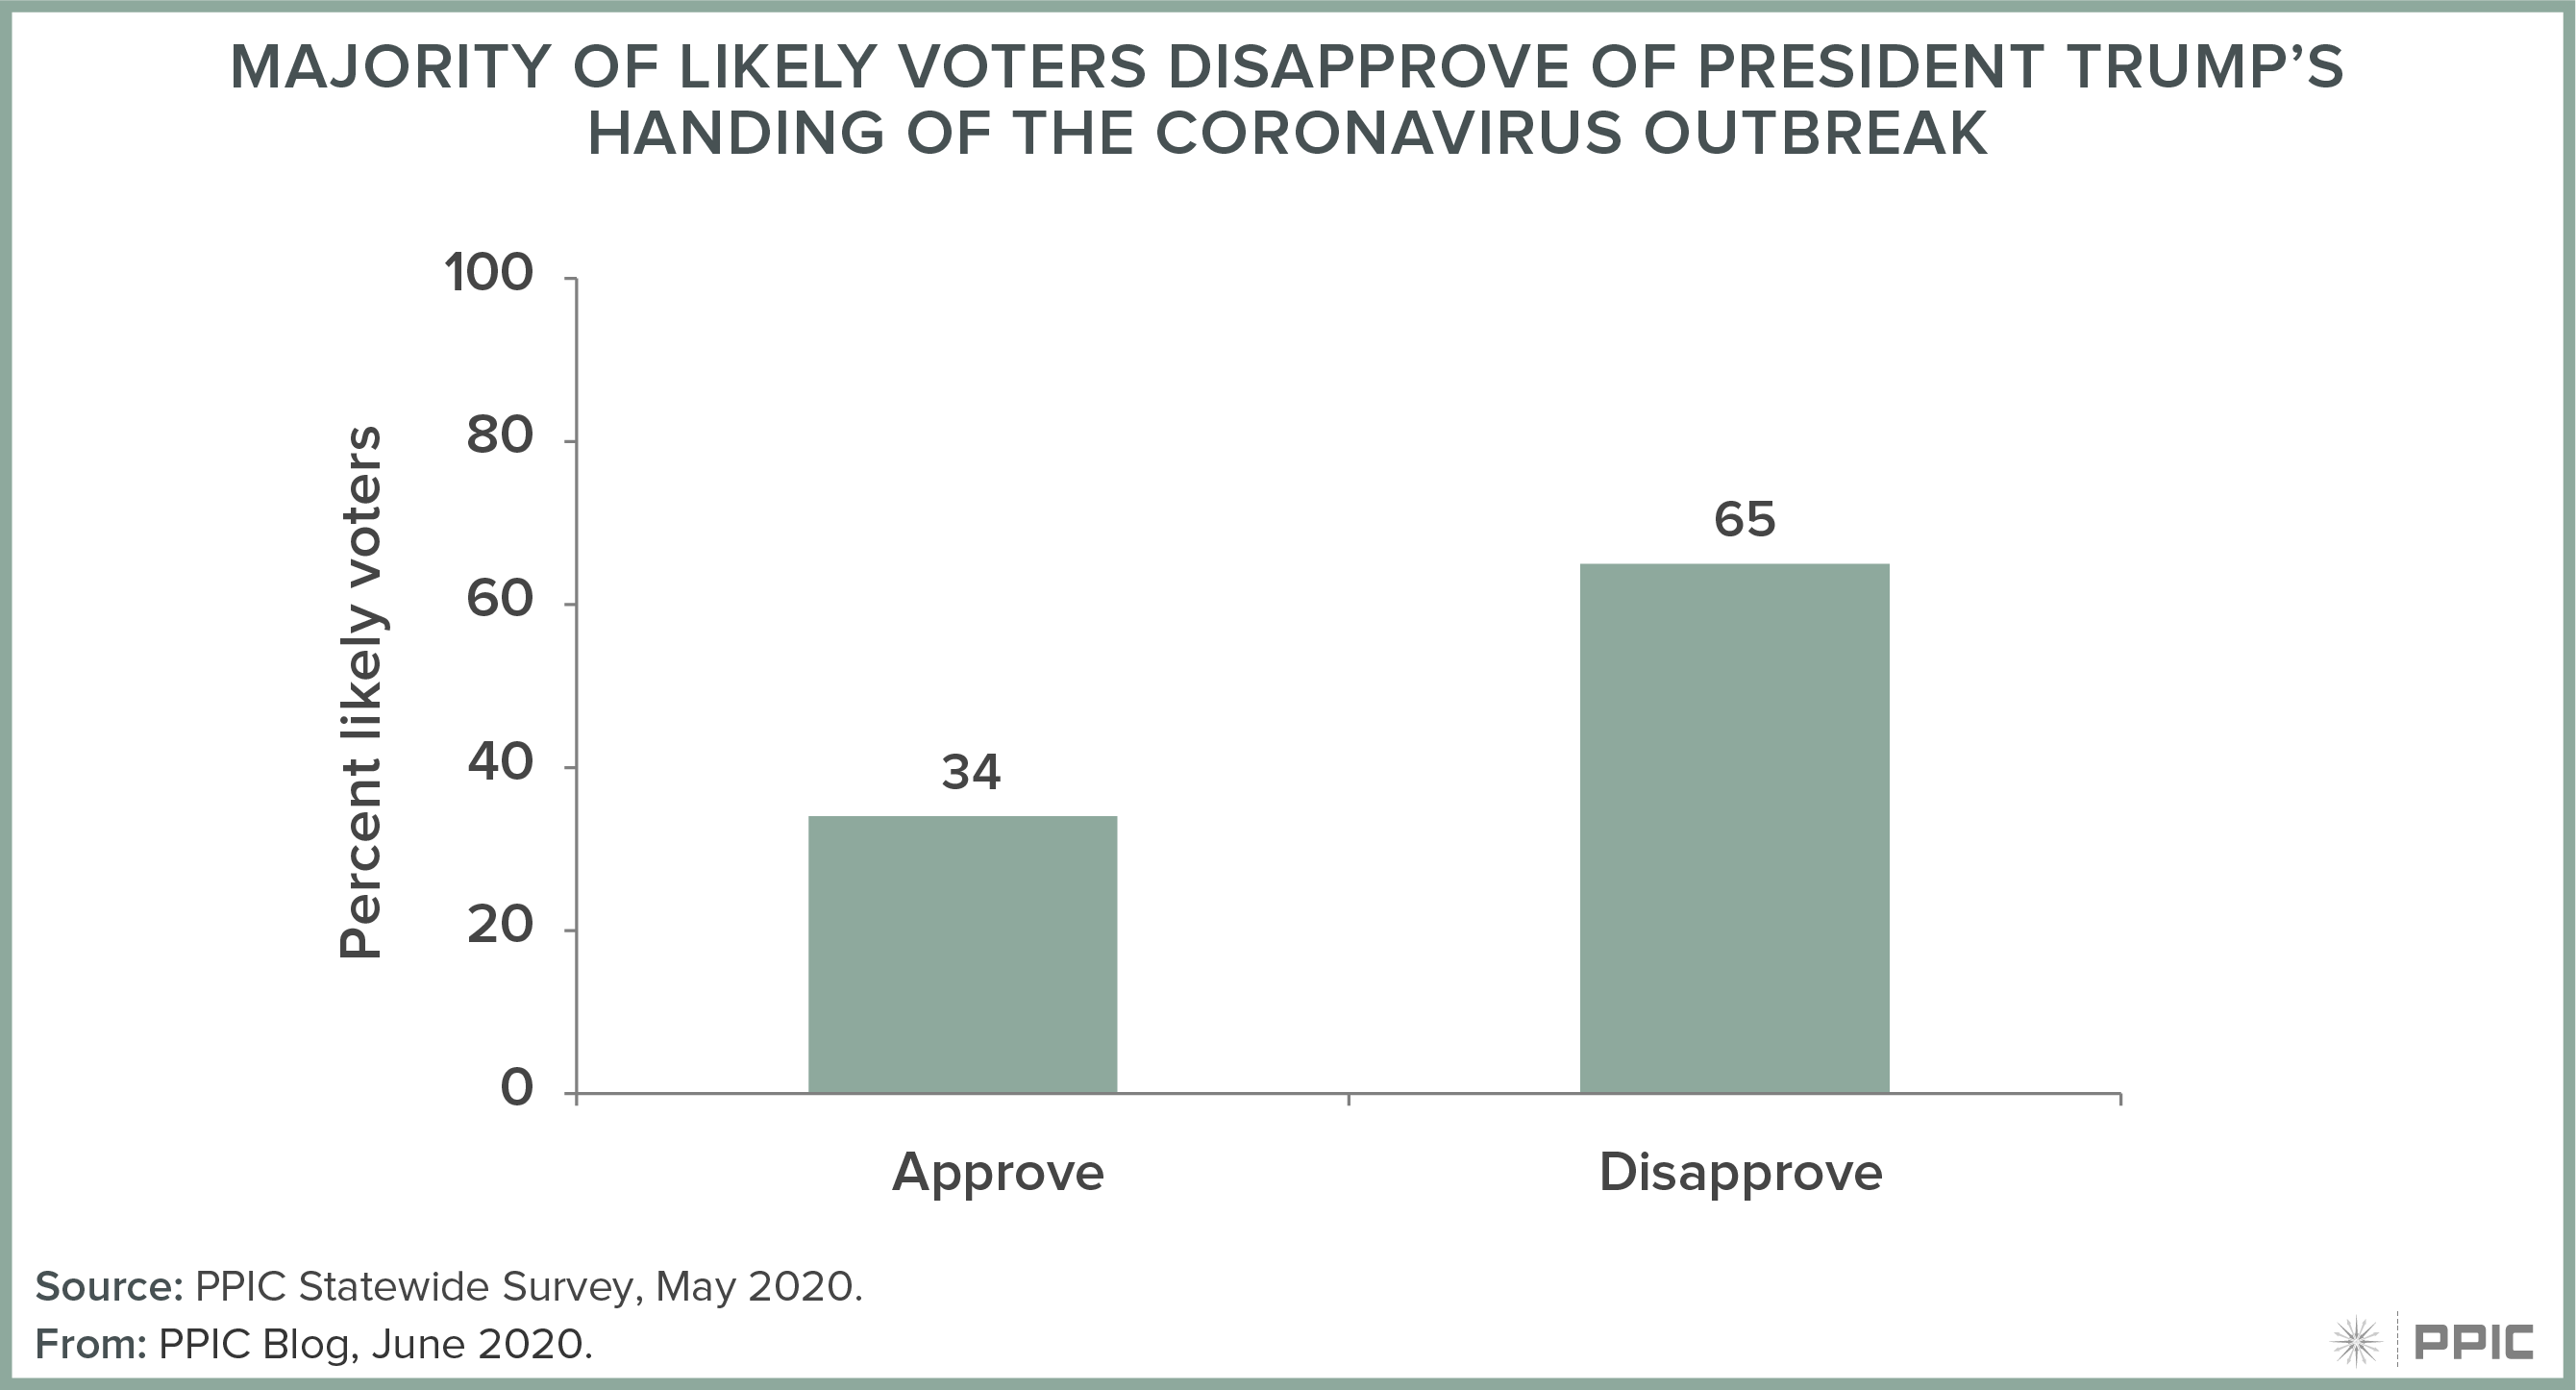 Figure - Majority of Likely Voters Disapprove of President Trump’s Handing of the Coronavirus Outbreak